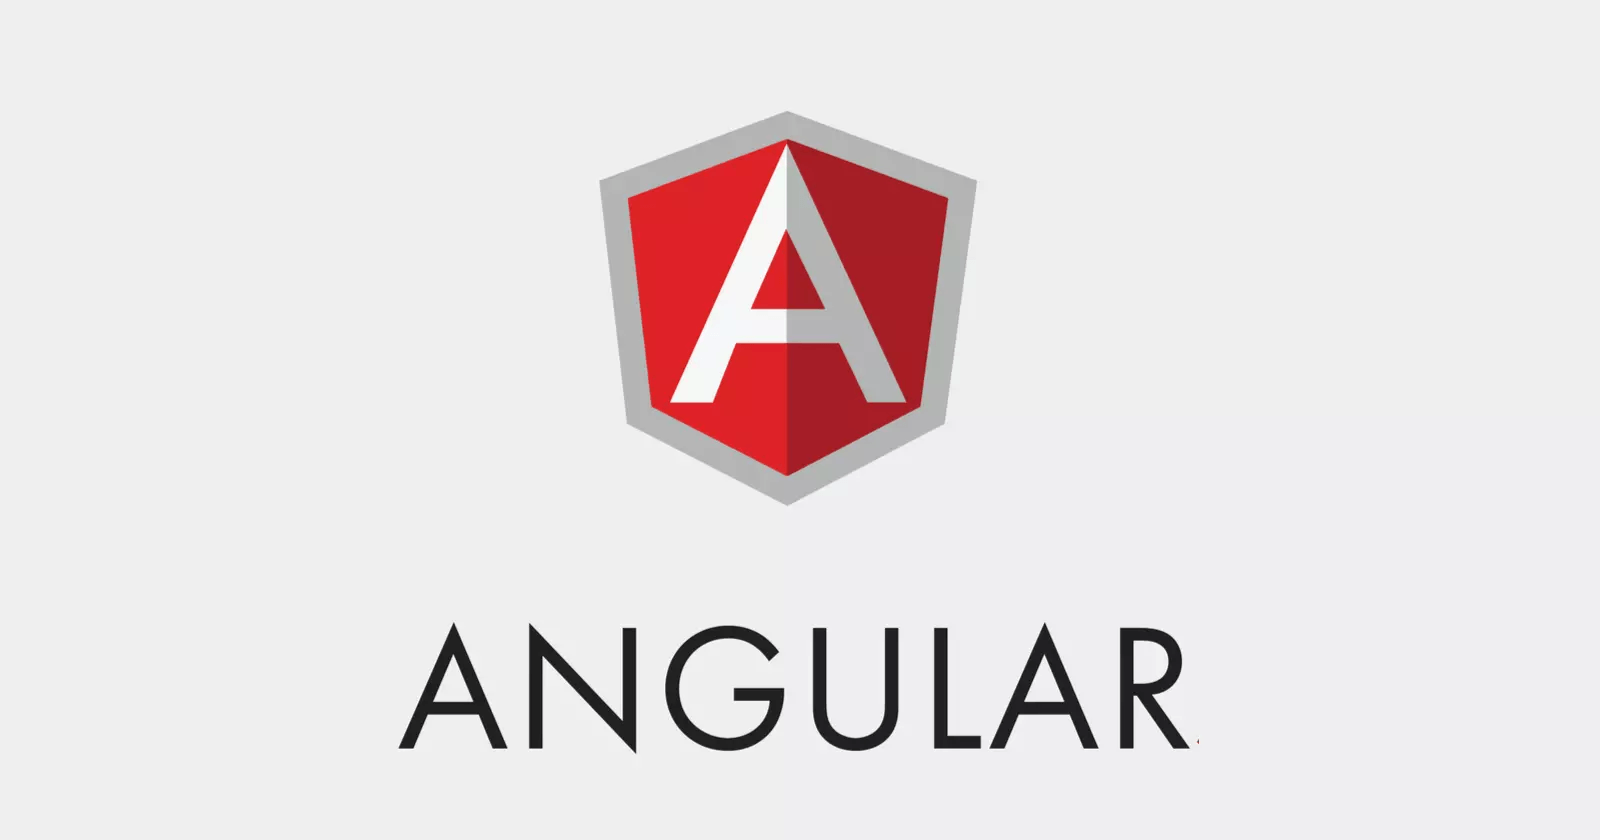 Error installing Angular on computer